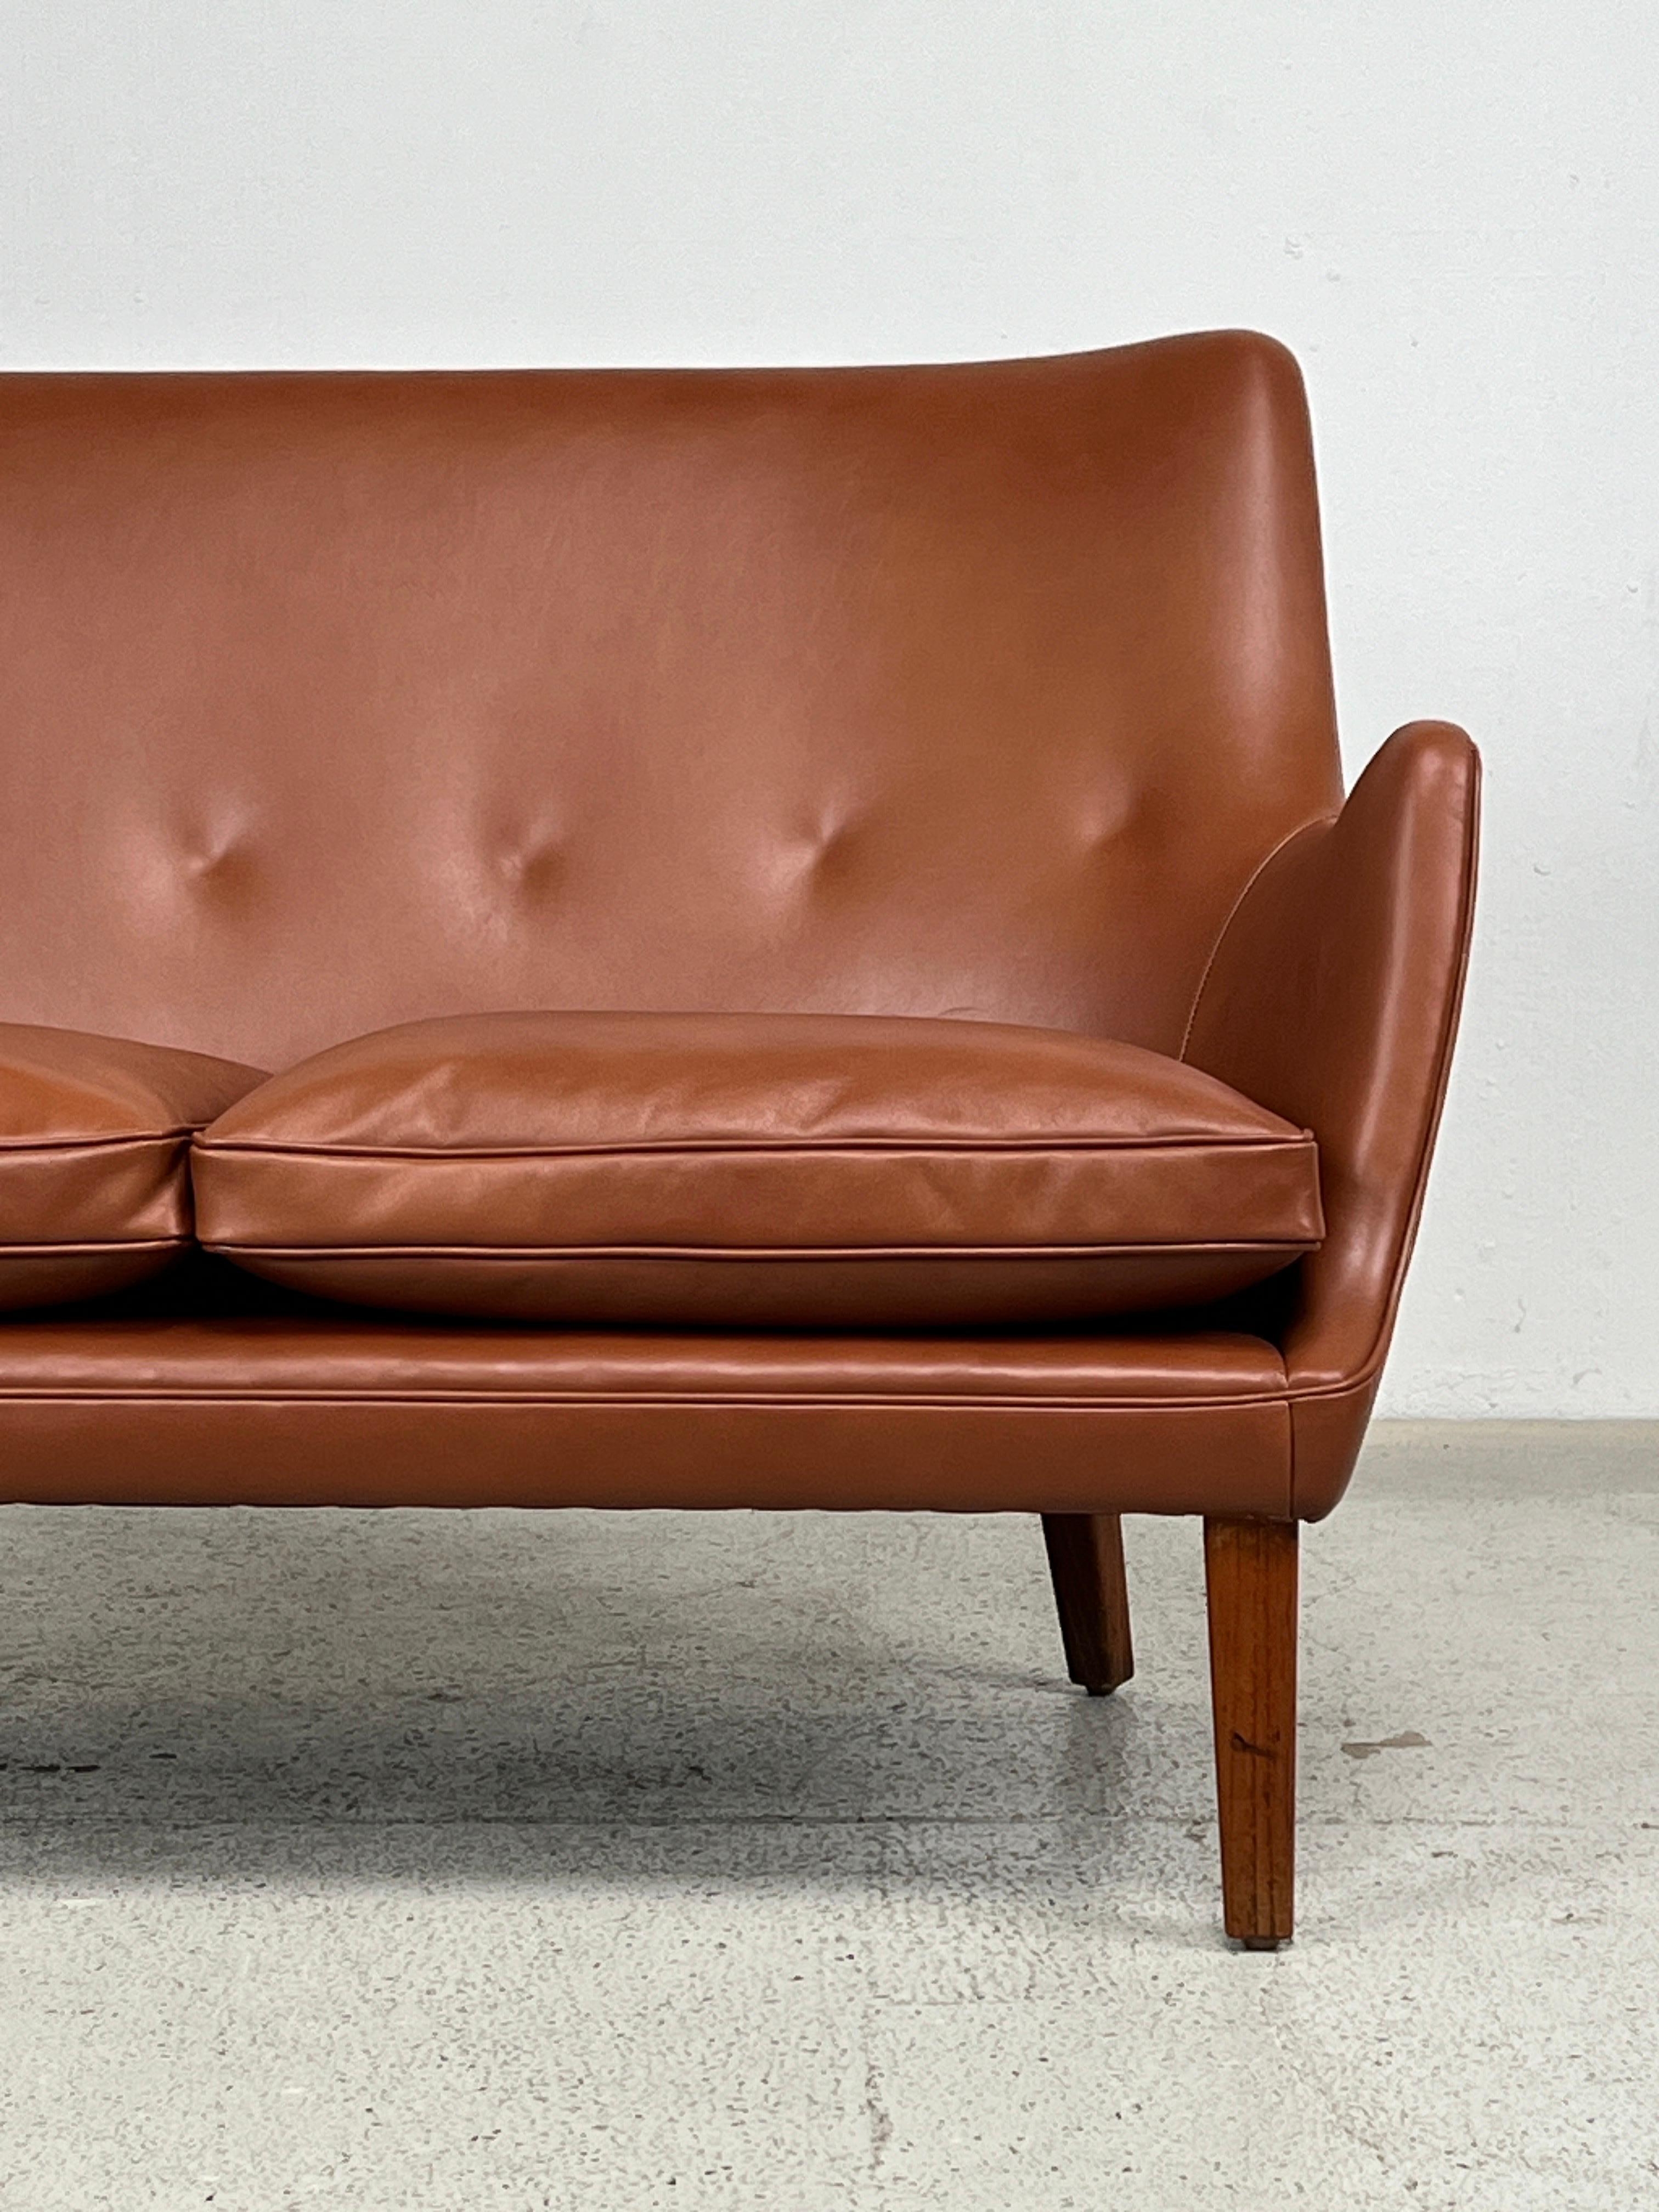 Mid-20th Century Arne Vodder Sofa for Ivan Schlechter For Sale